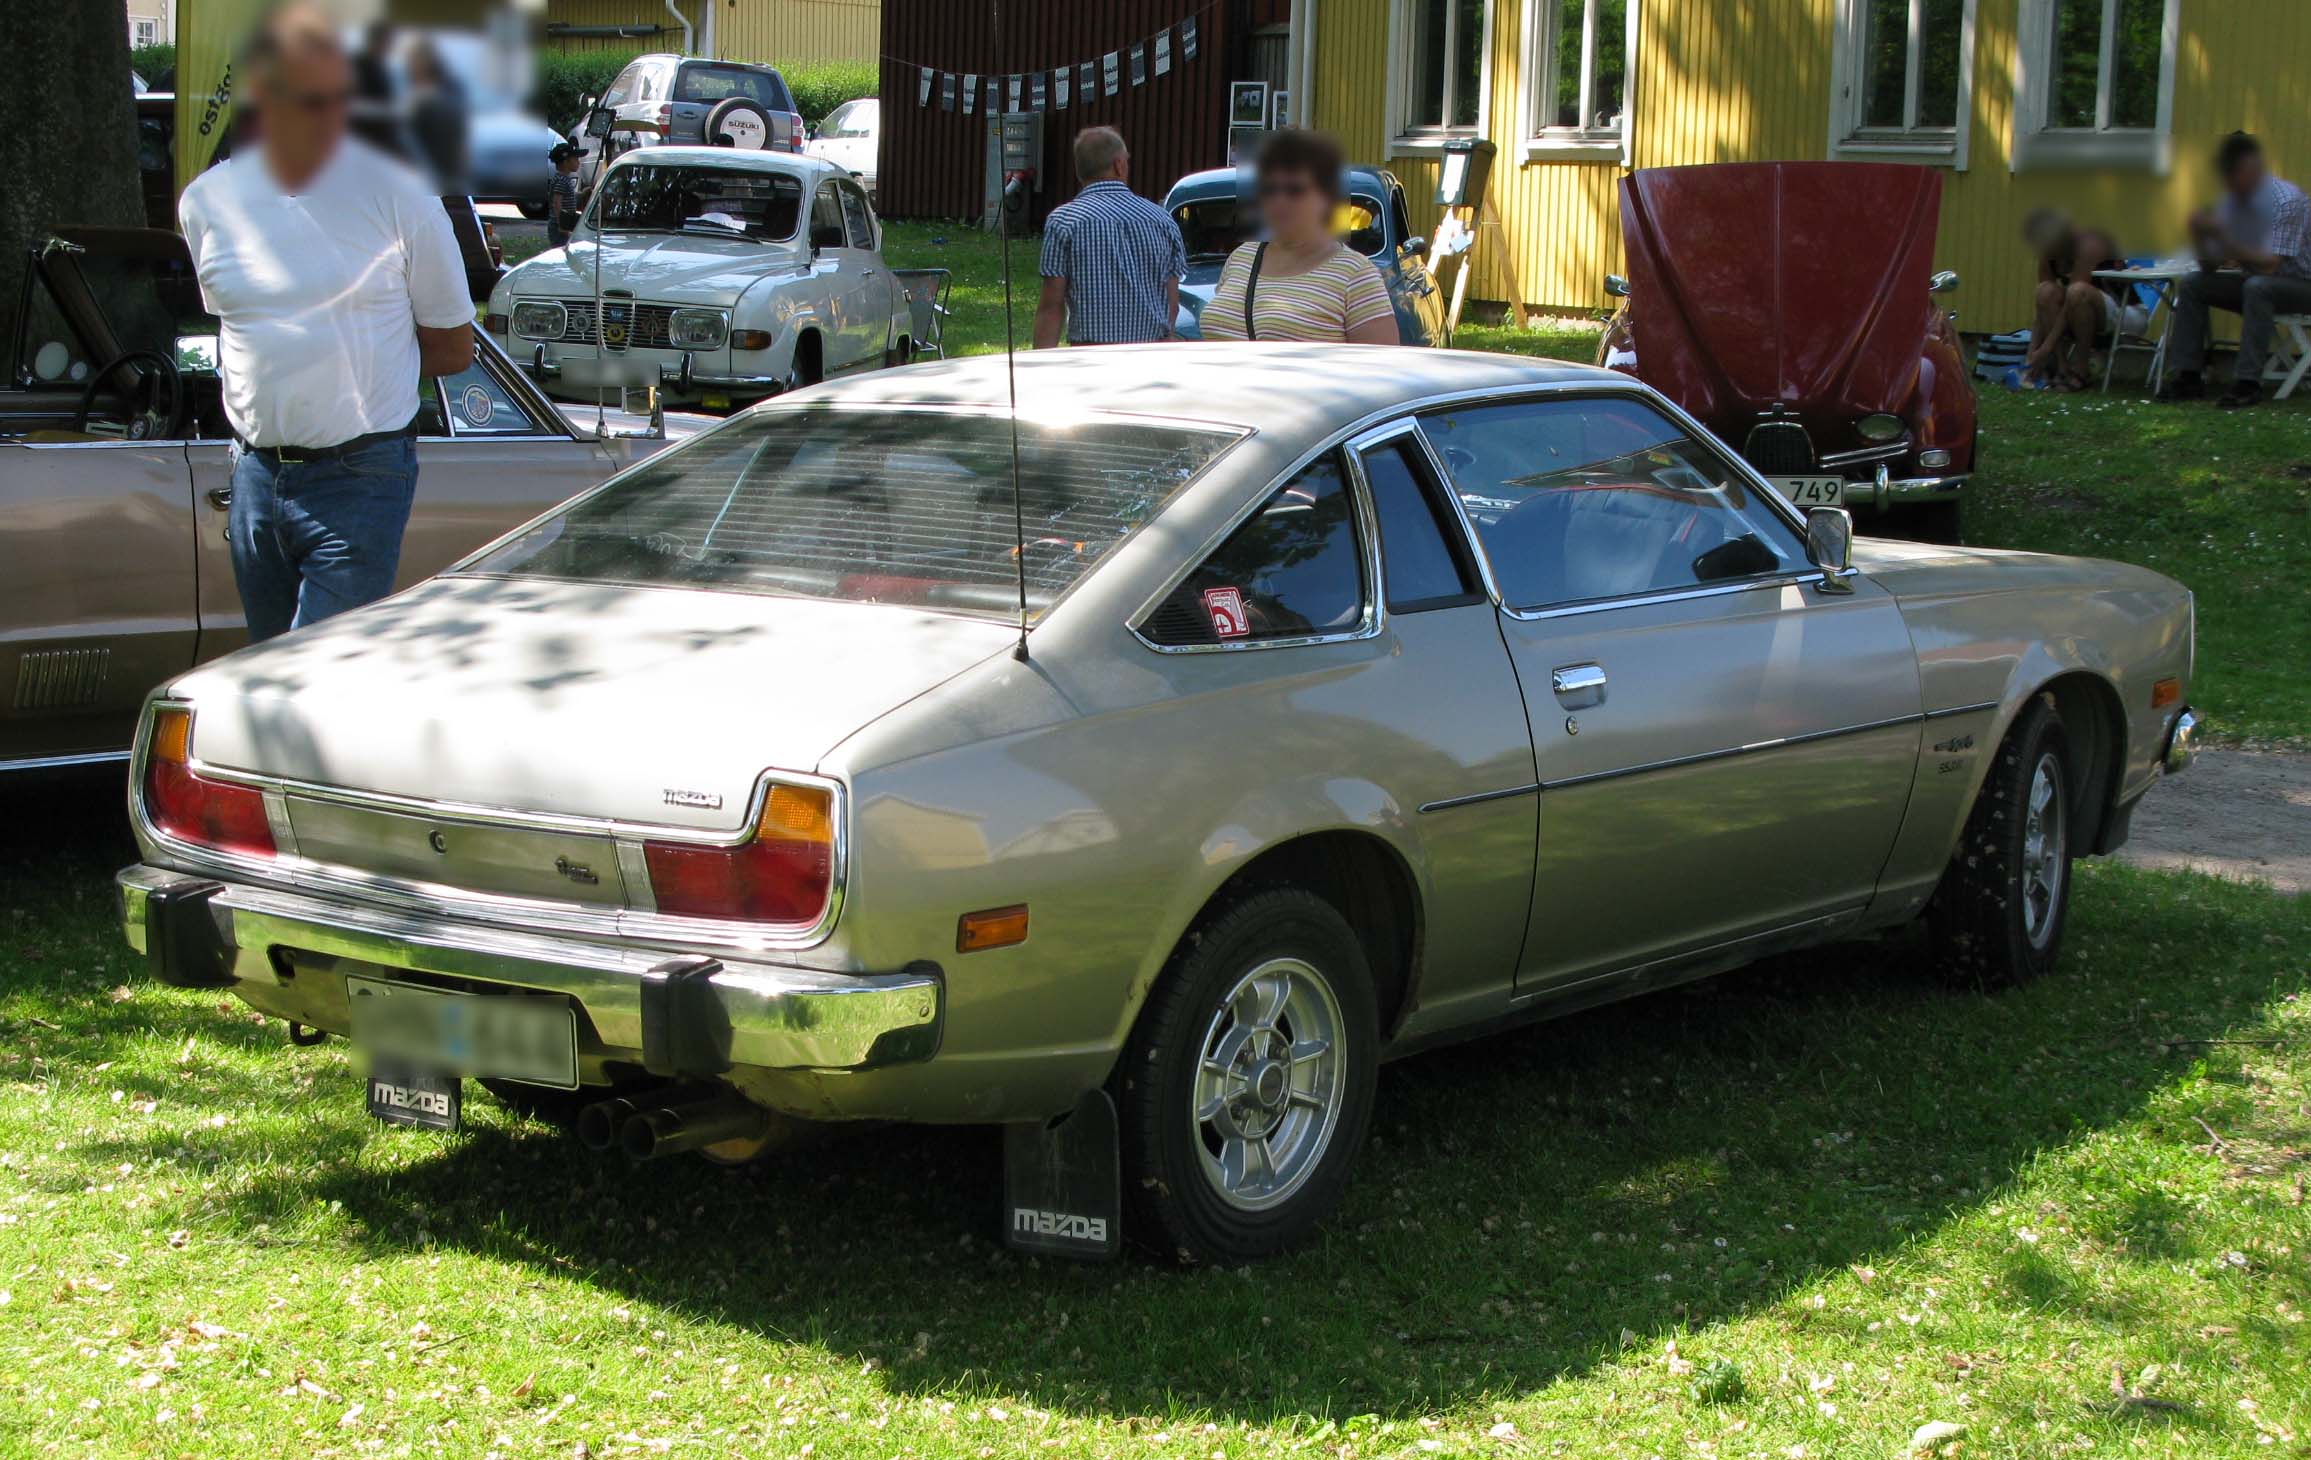 File:1977 Mazda RX-5 rear right.jpg